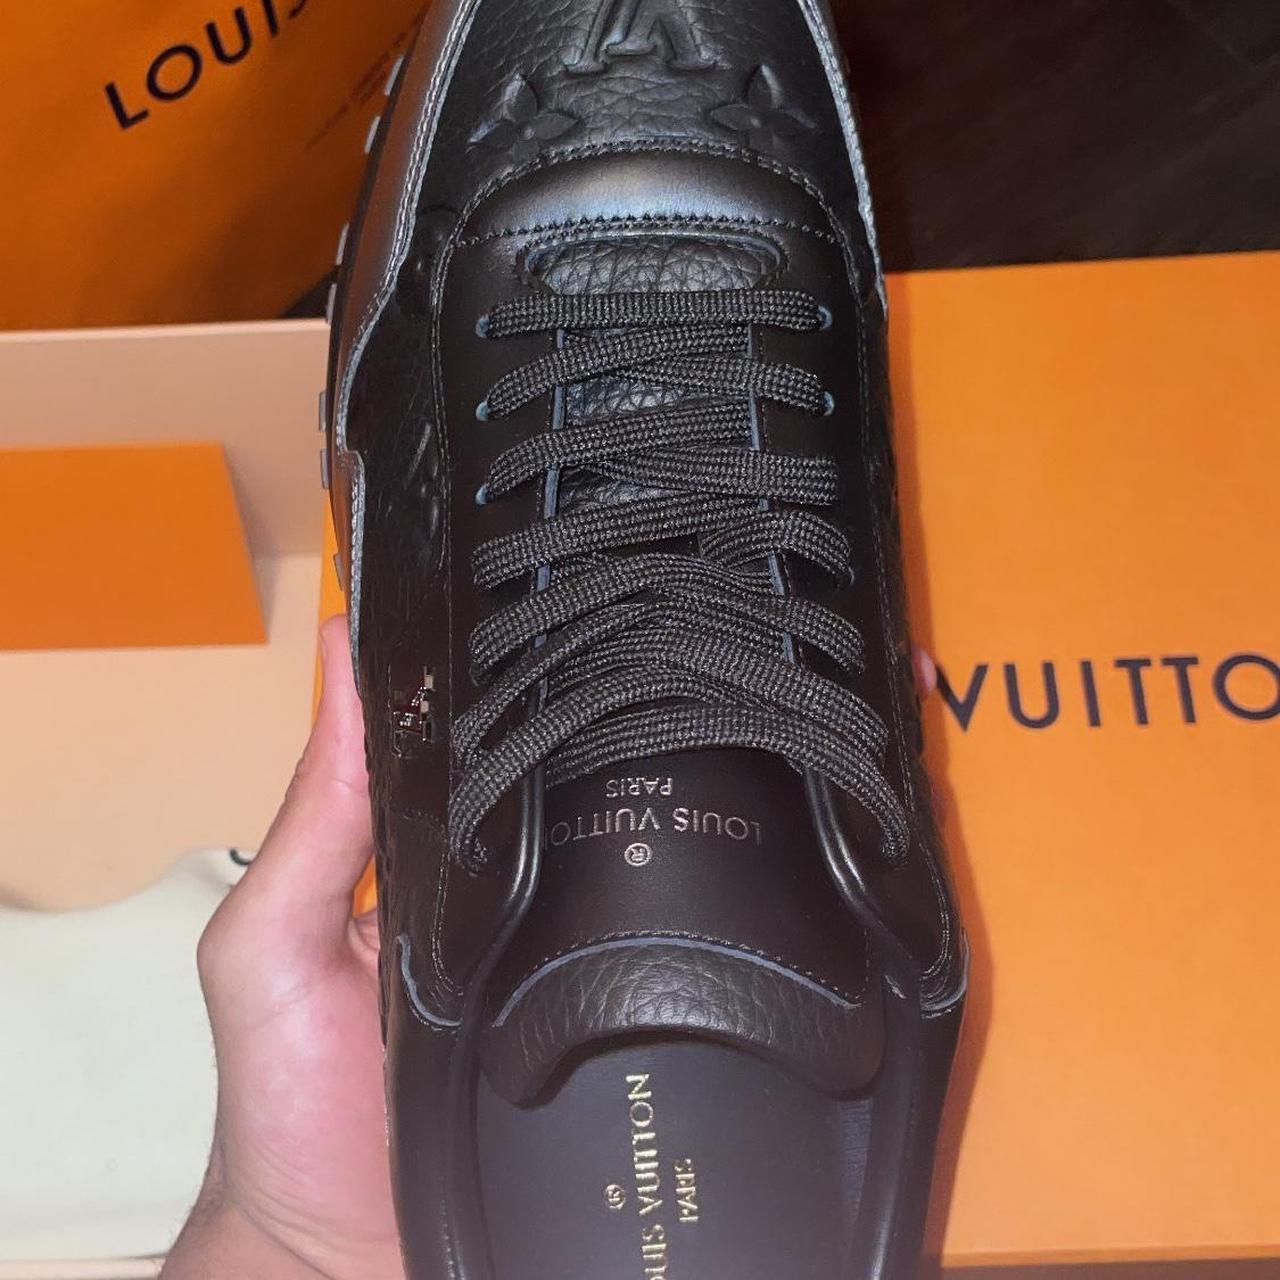 Louis Vuitton low top sneakers. NO BOX! Worn a - Depop